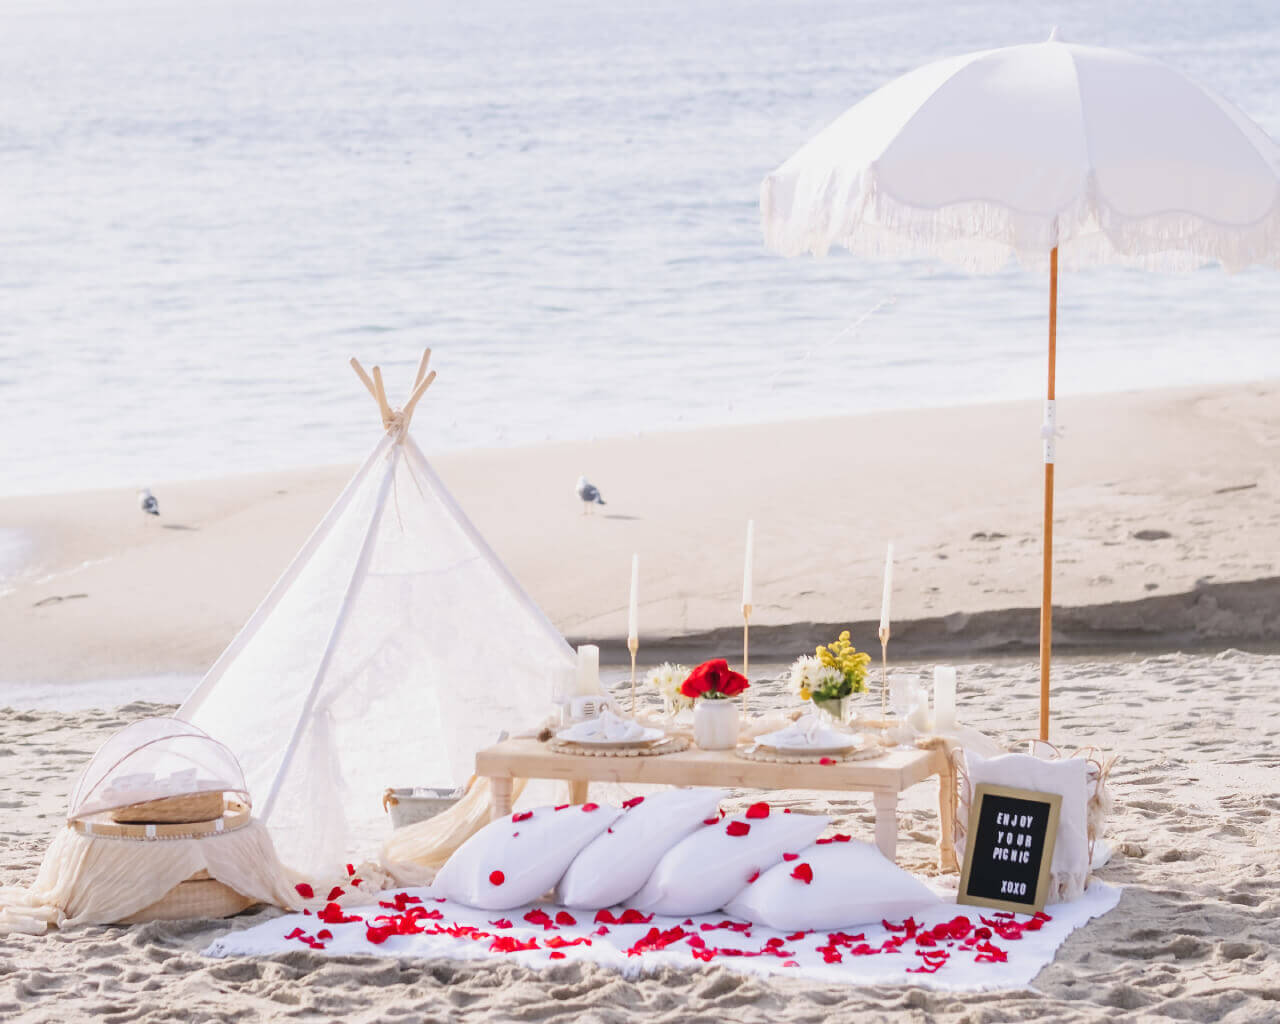 Newport Beach luxury picnic company CA